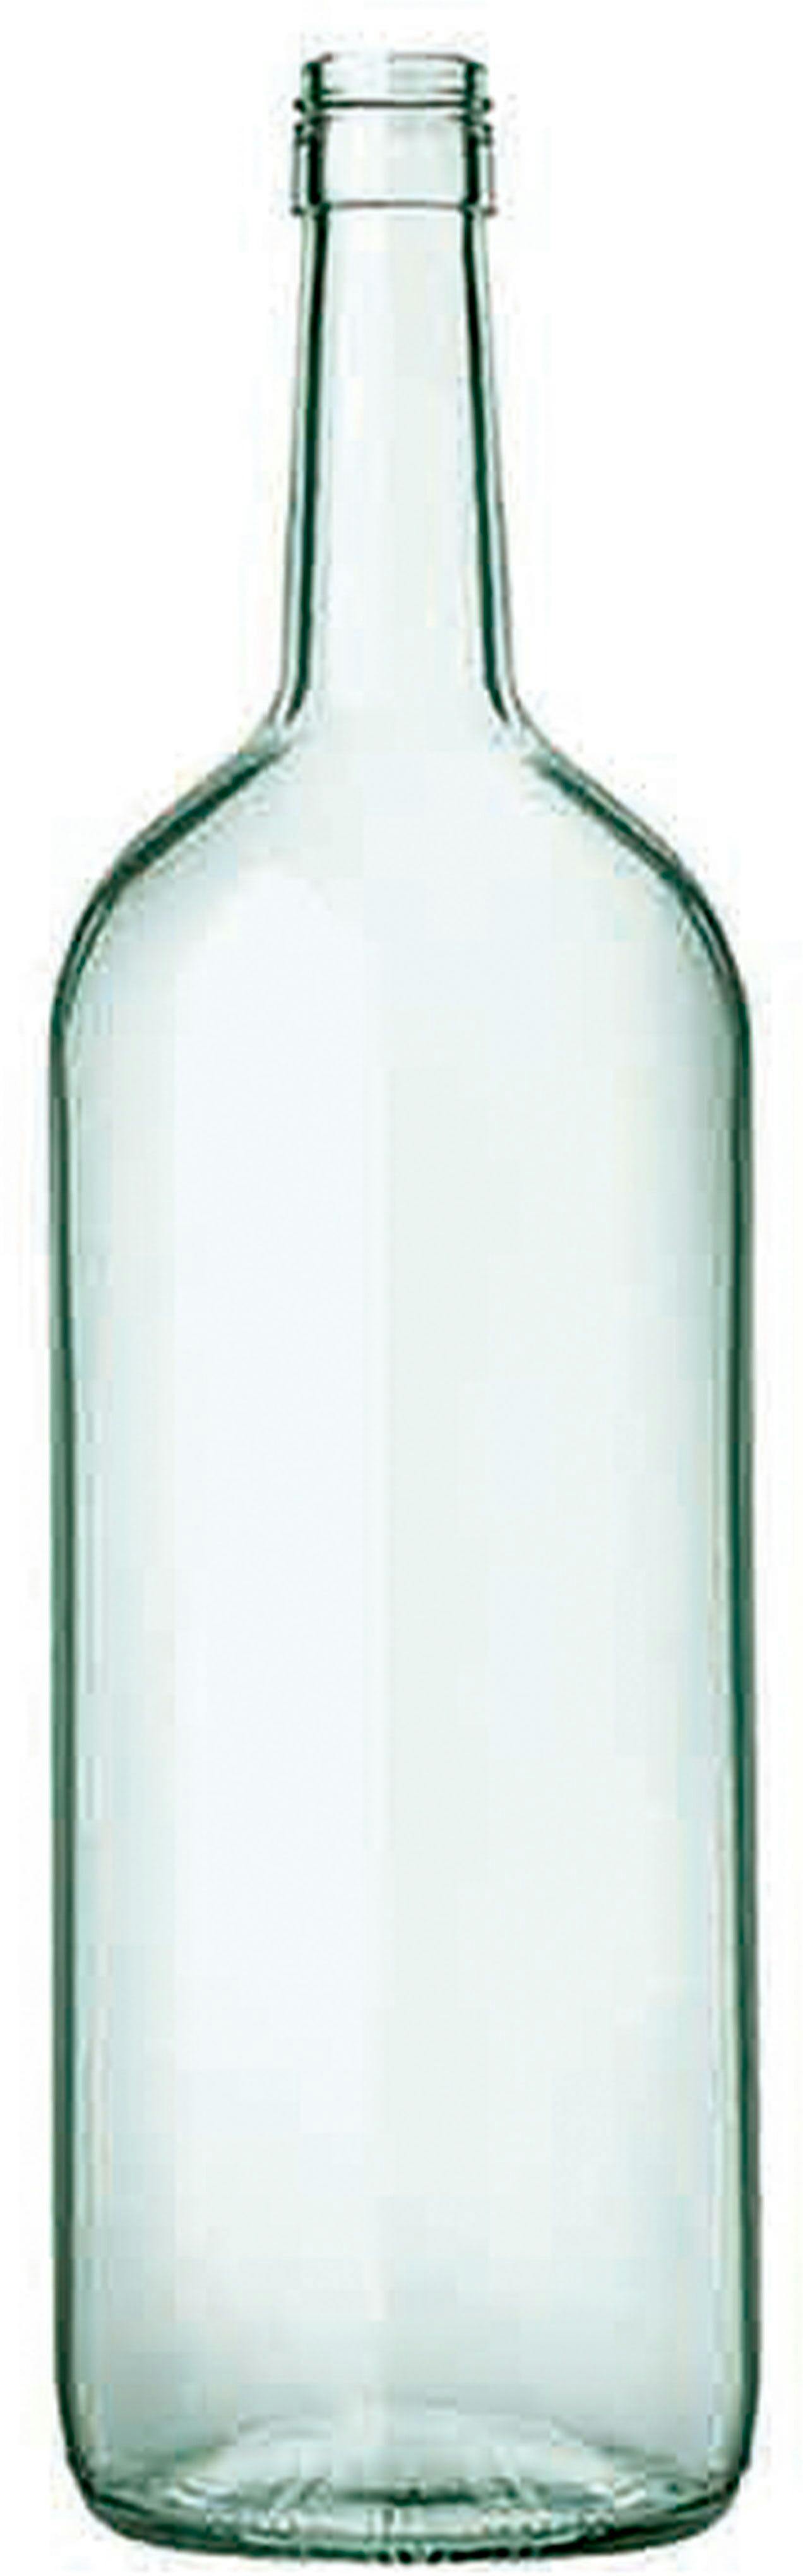 Bottle BORD VERONA 1500 BVS 30X60